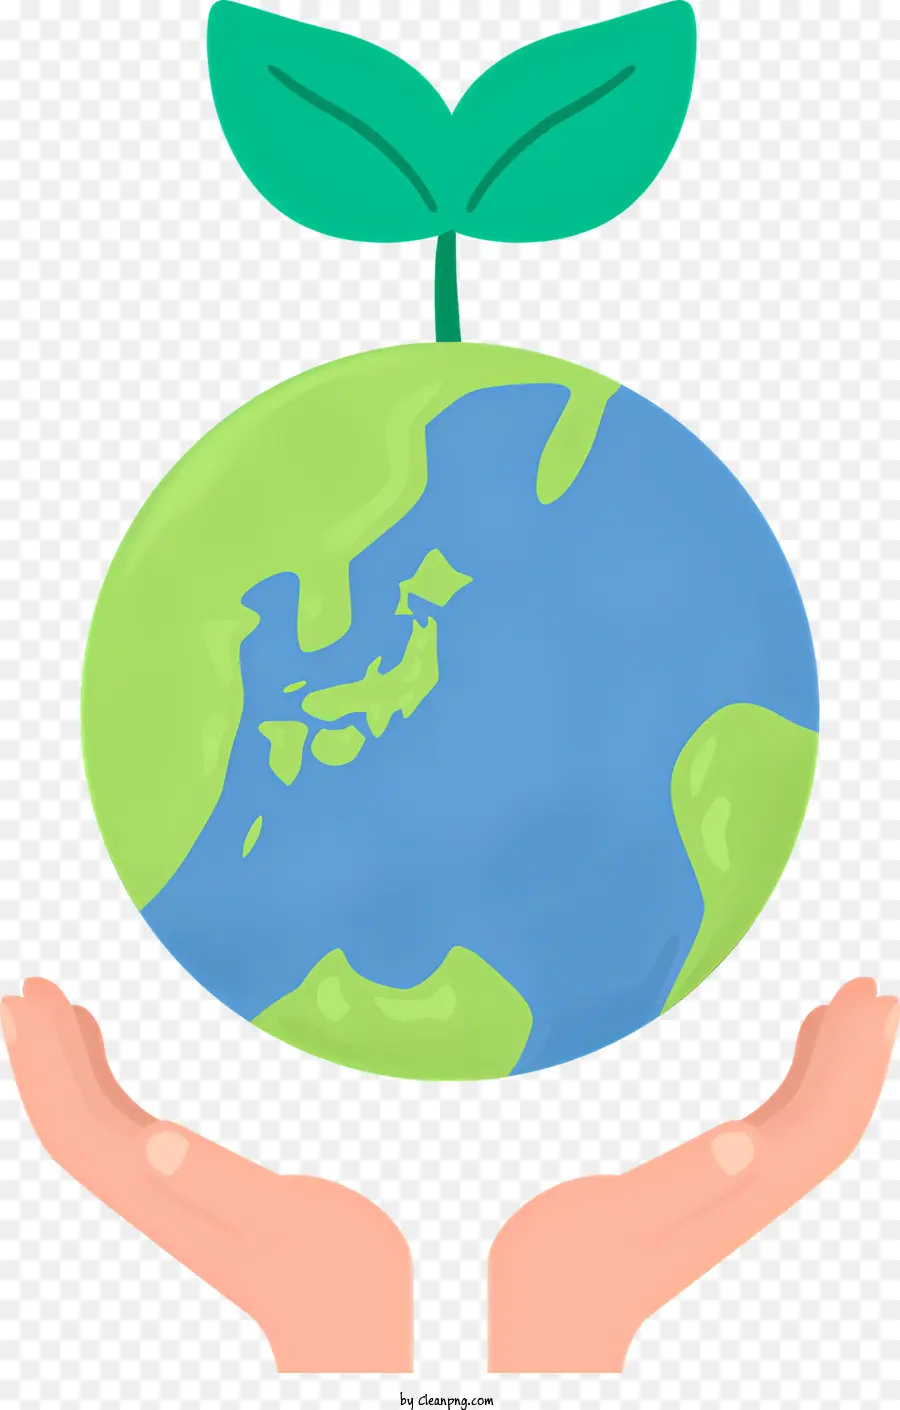 verde foglia - Hand tiene la pianta su Blue Planet; 
sfondo nero